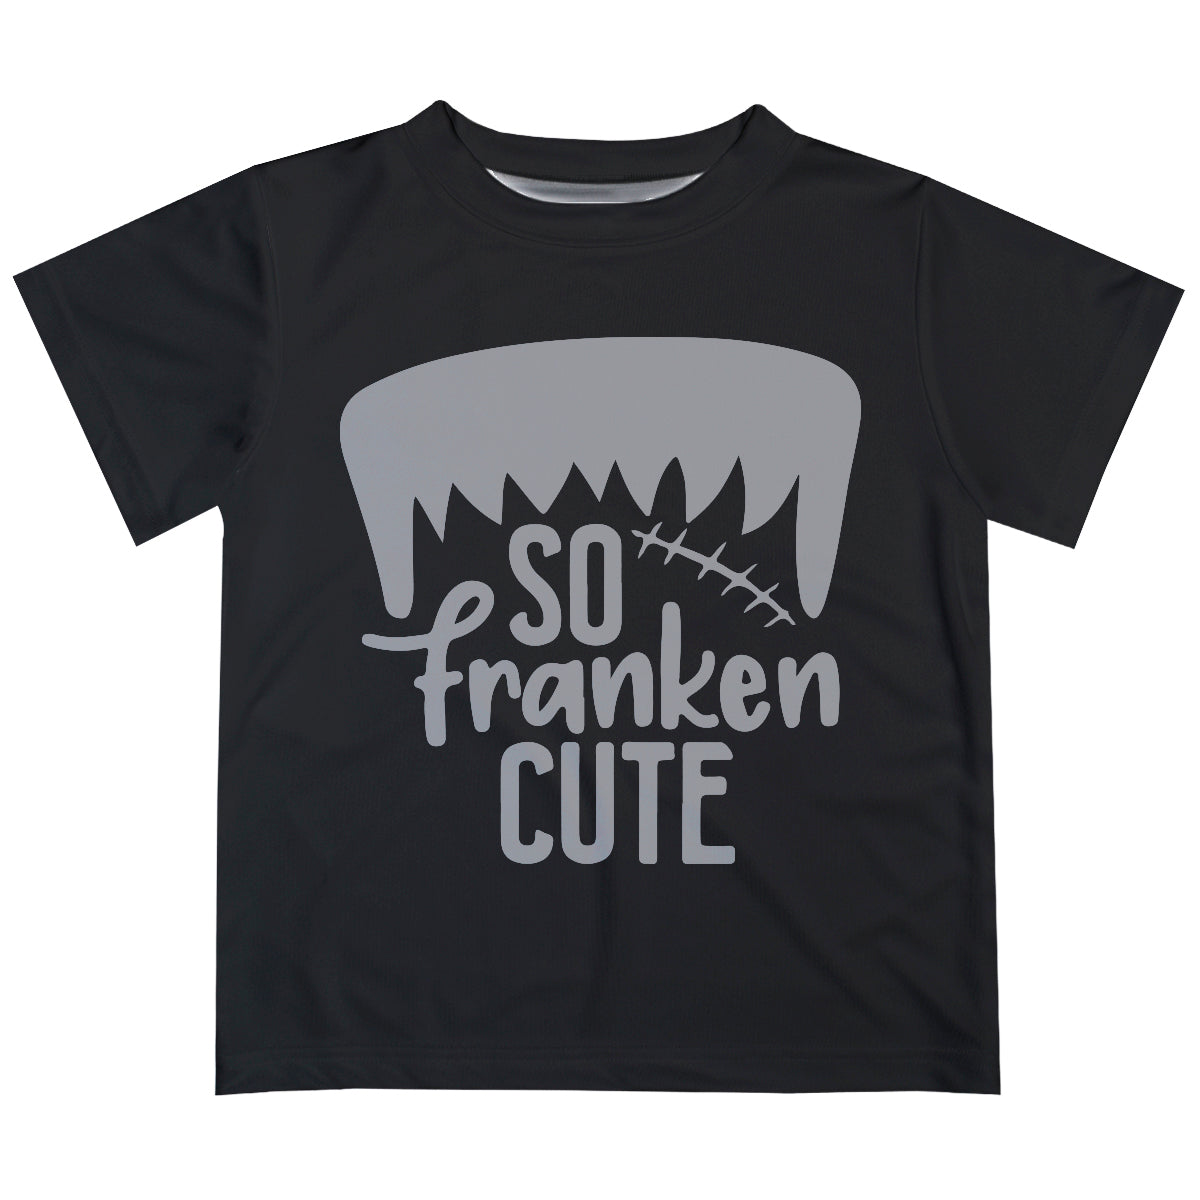 So Cute Franken Cute Black Short Sleeve Tee Shirt